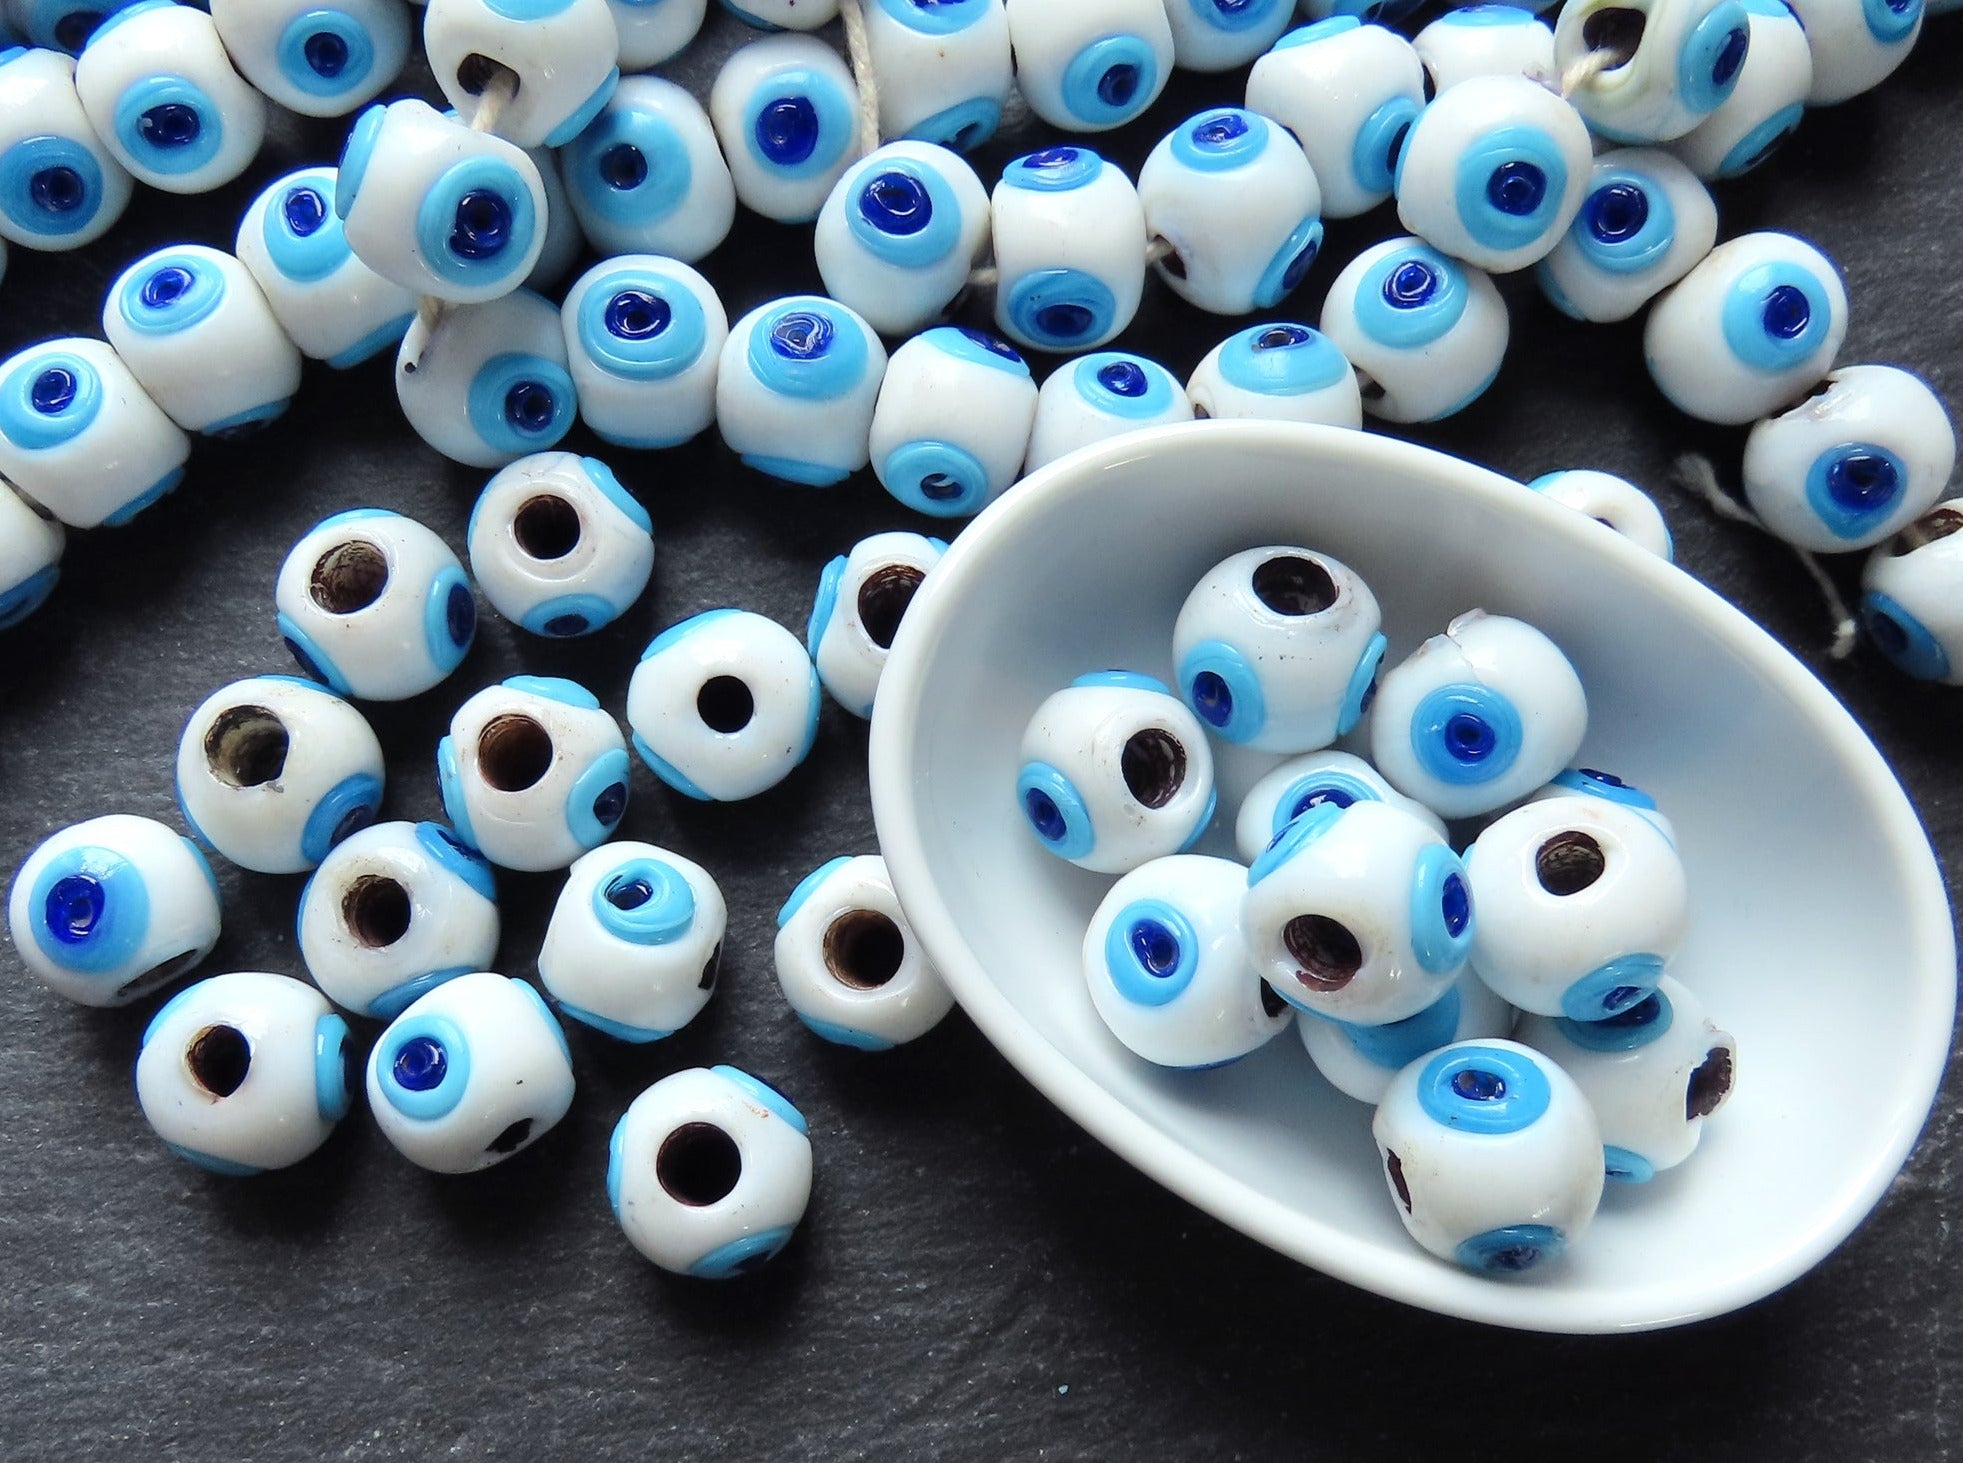 Evil Eye Beads 